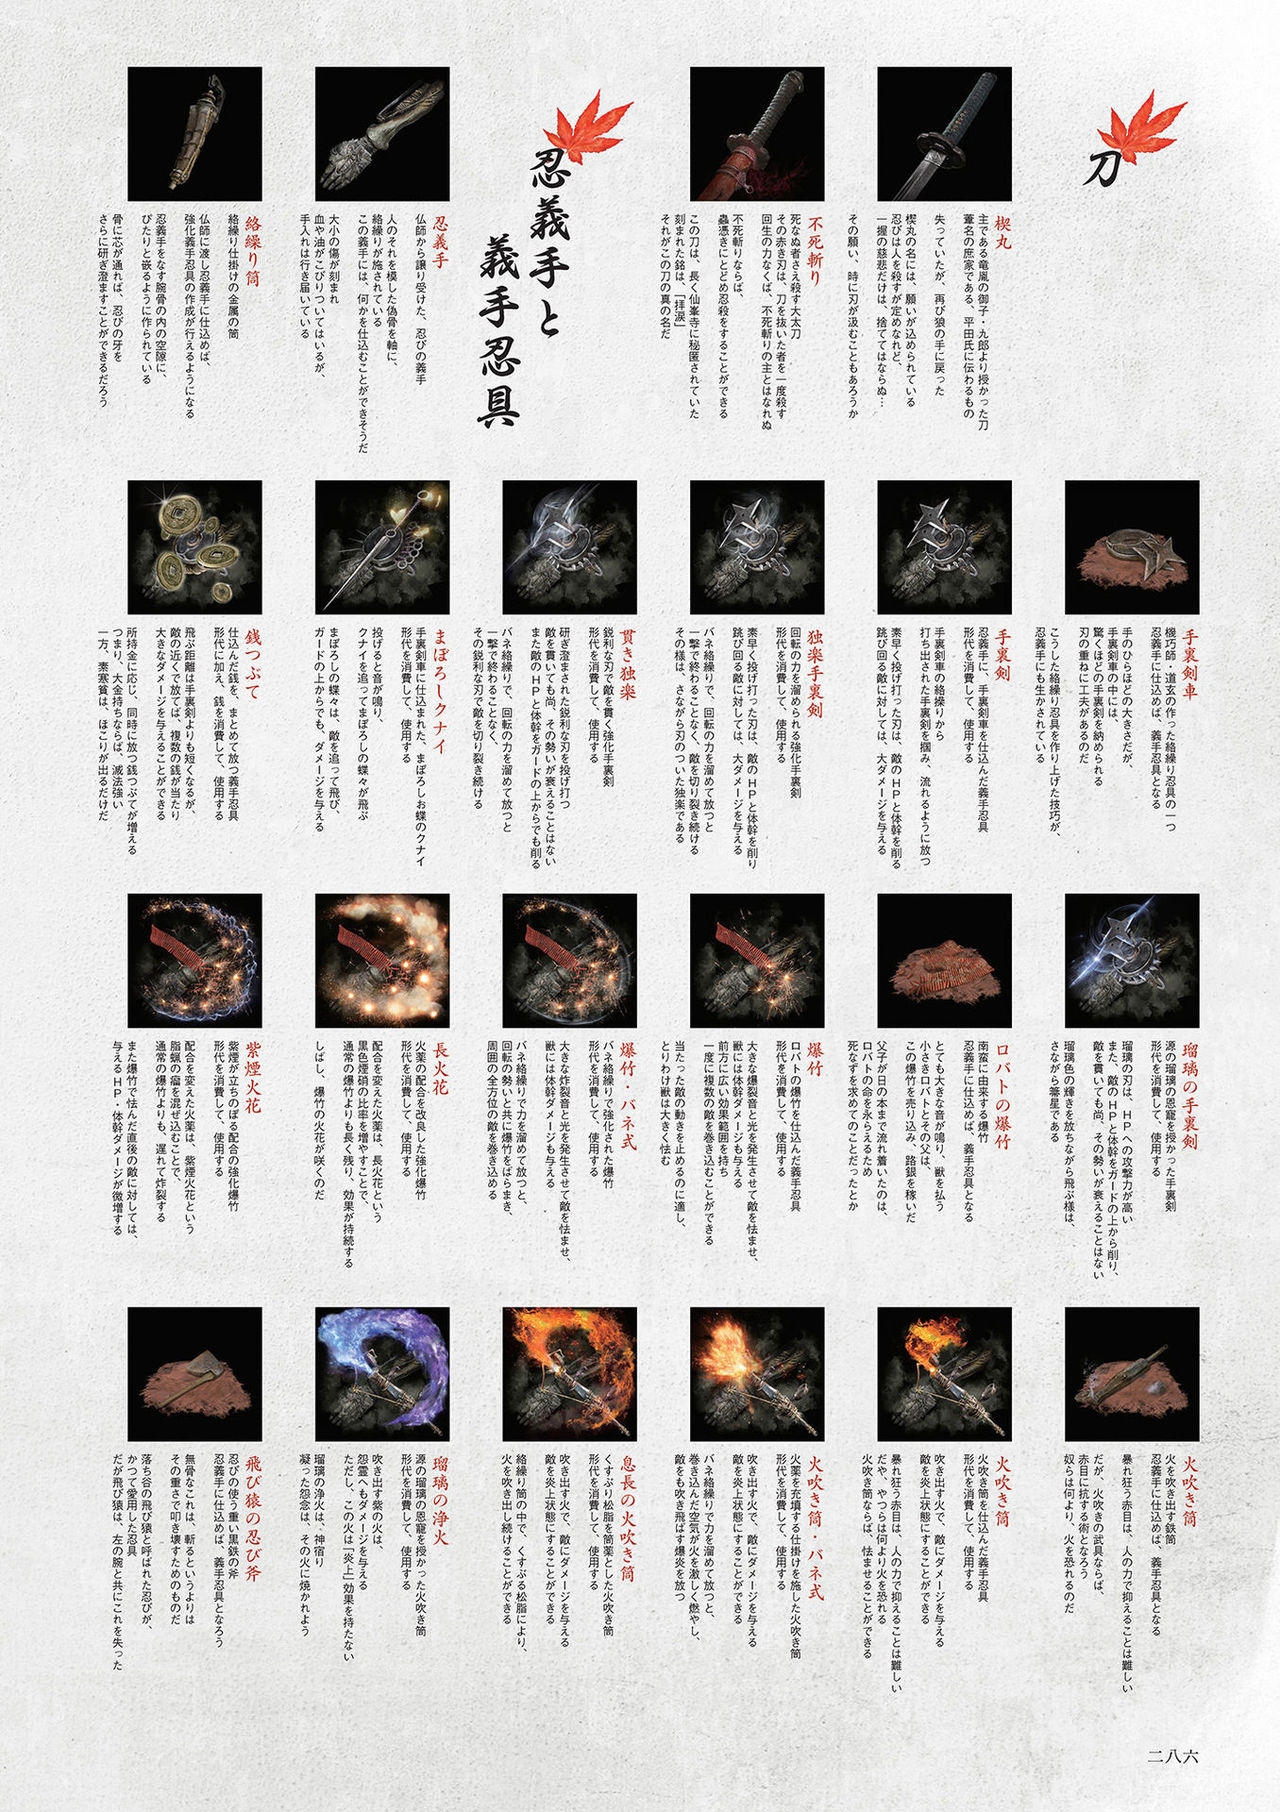 SEKIRO - SHADOWS DIE TWICE Official Artworks 197